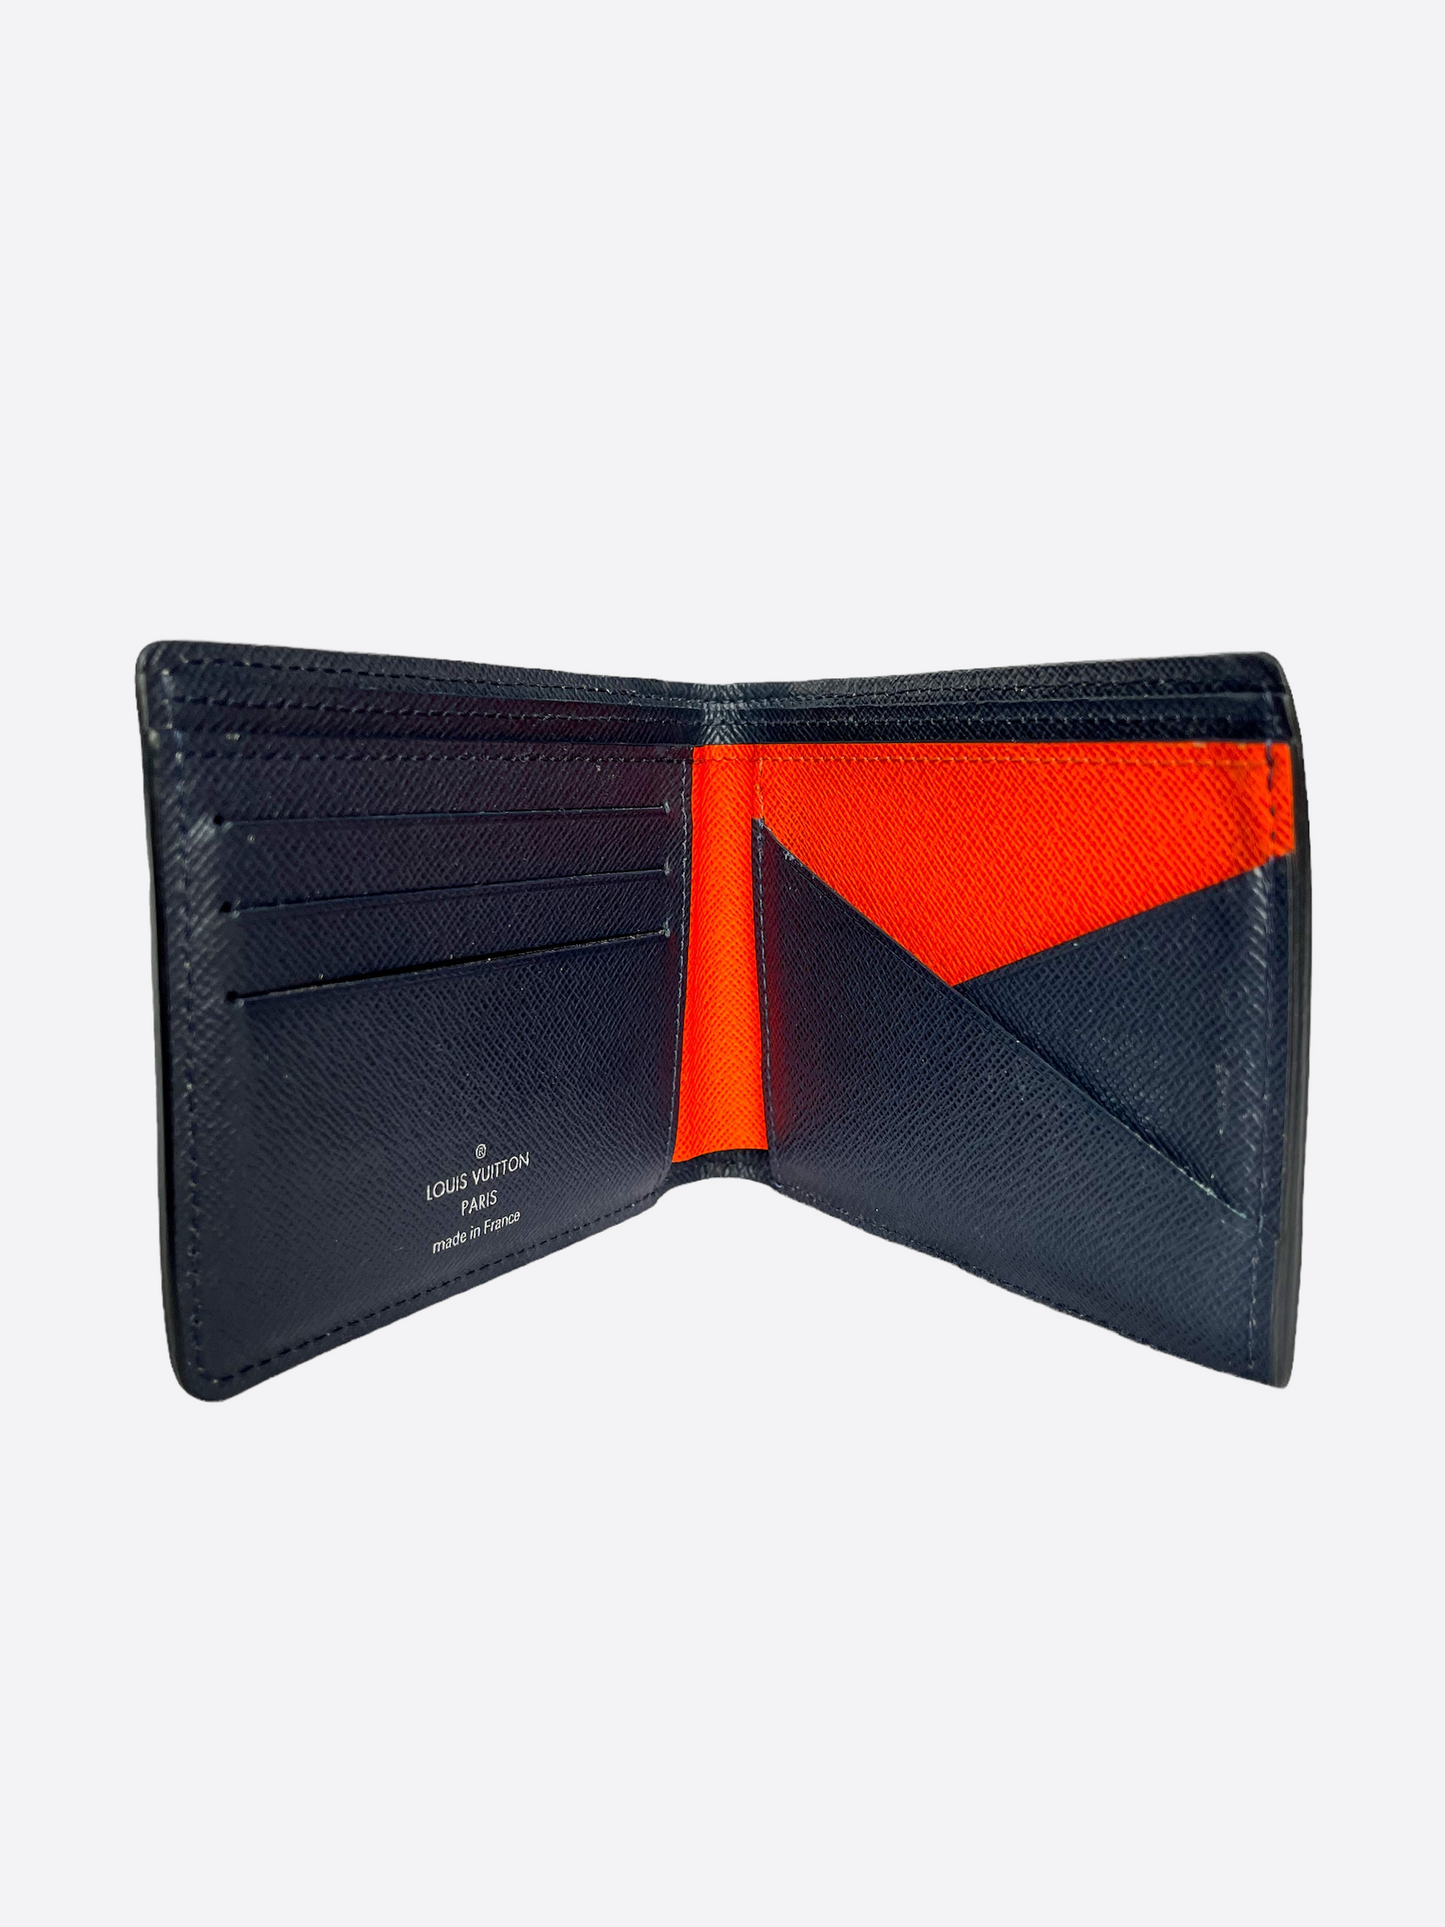 Handbag Louis Vuitton Double Sided Wallet Blue Epi 122050022